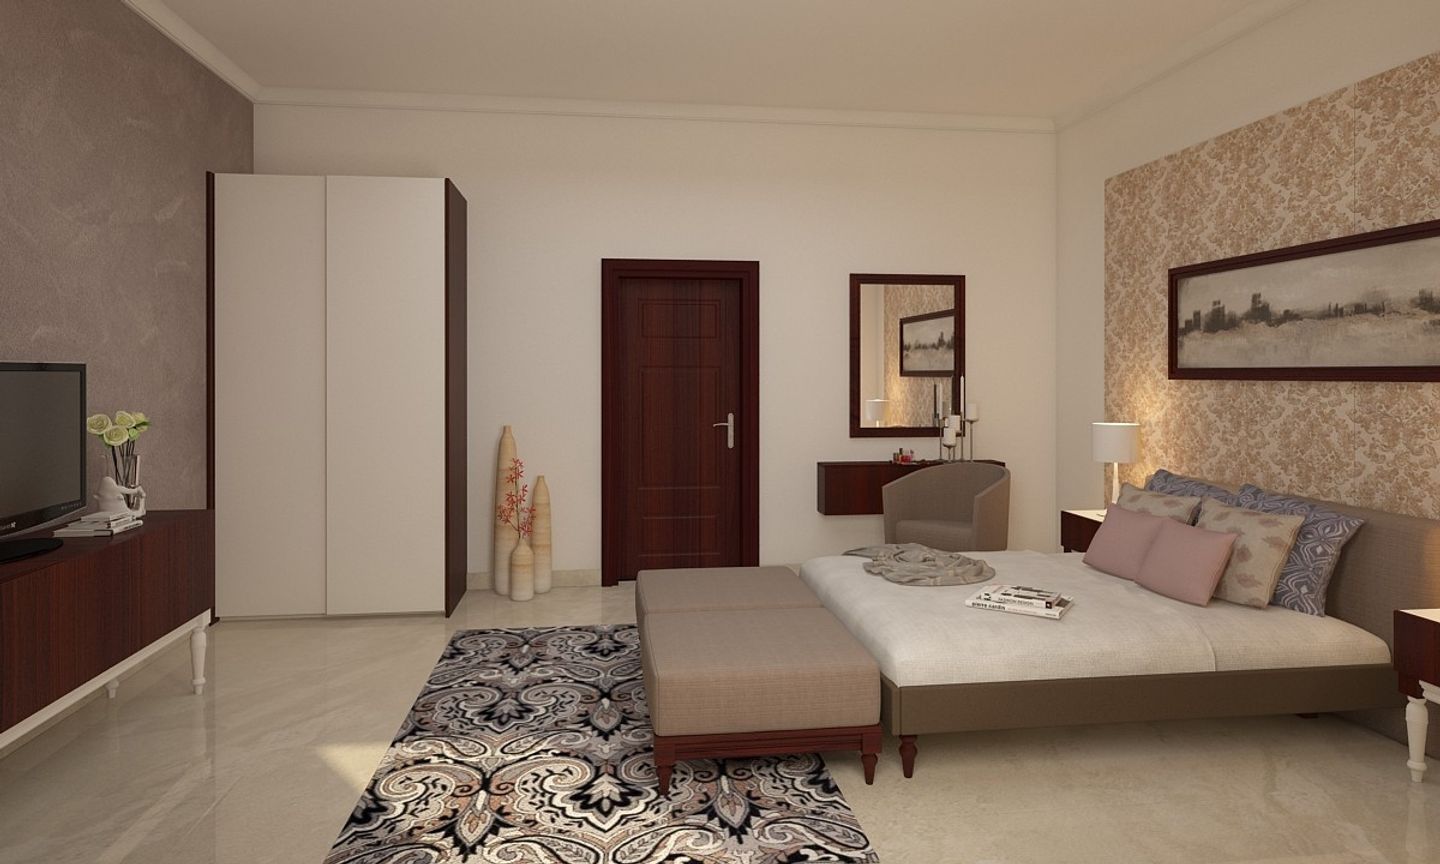 Master Bedroom Interior Design With Beige Contemporary Palette